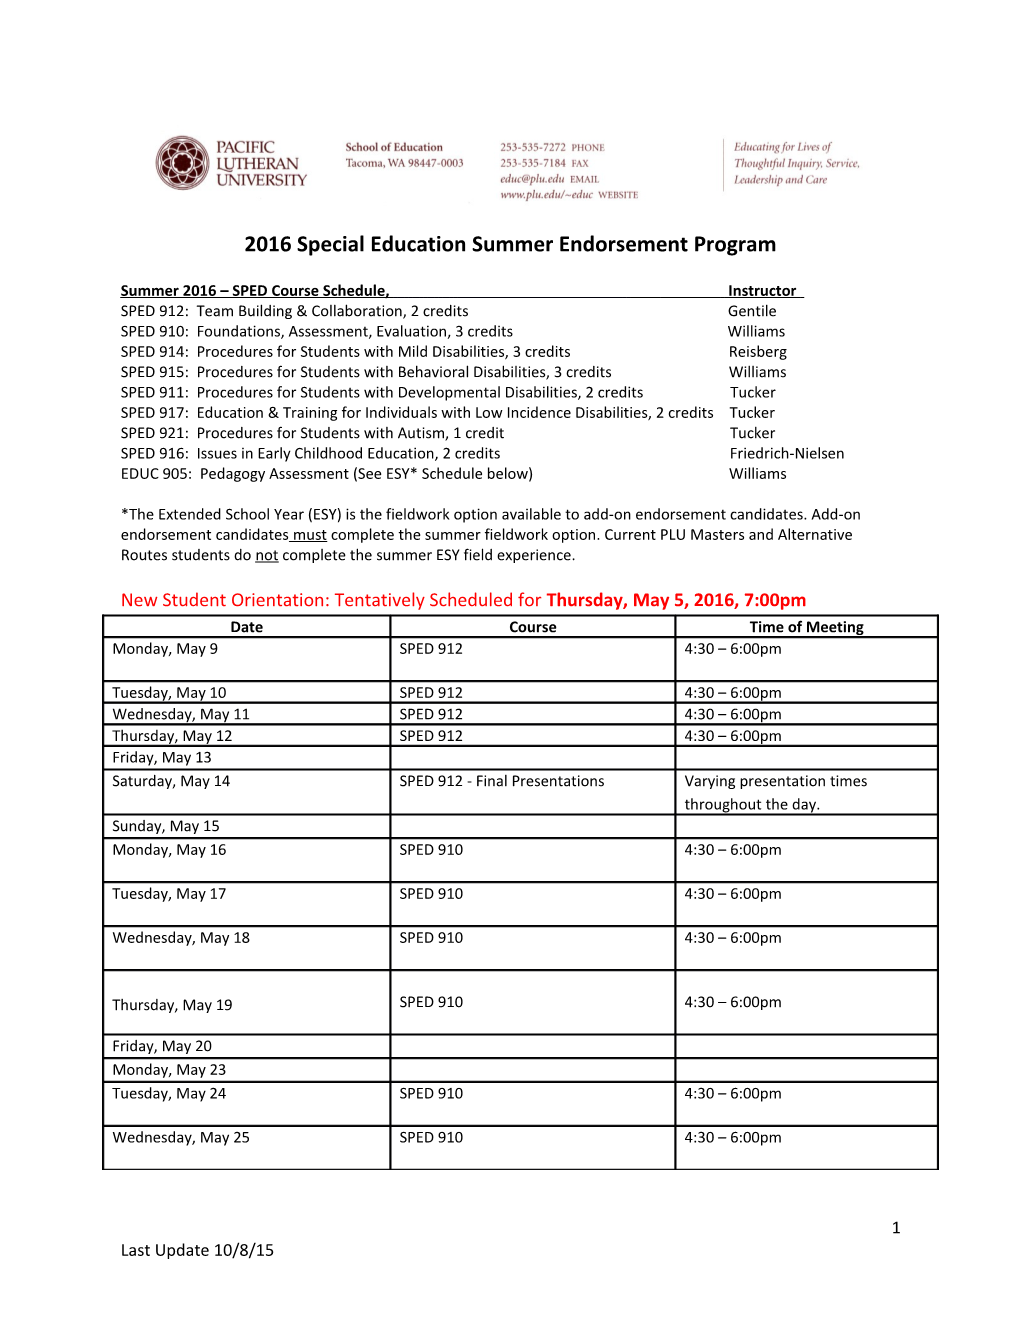 2014 SPED Endorsement Schedule 4.29.14